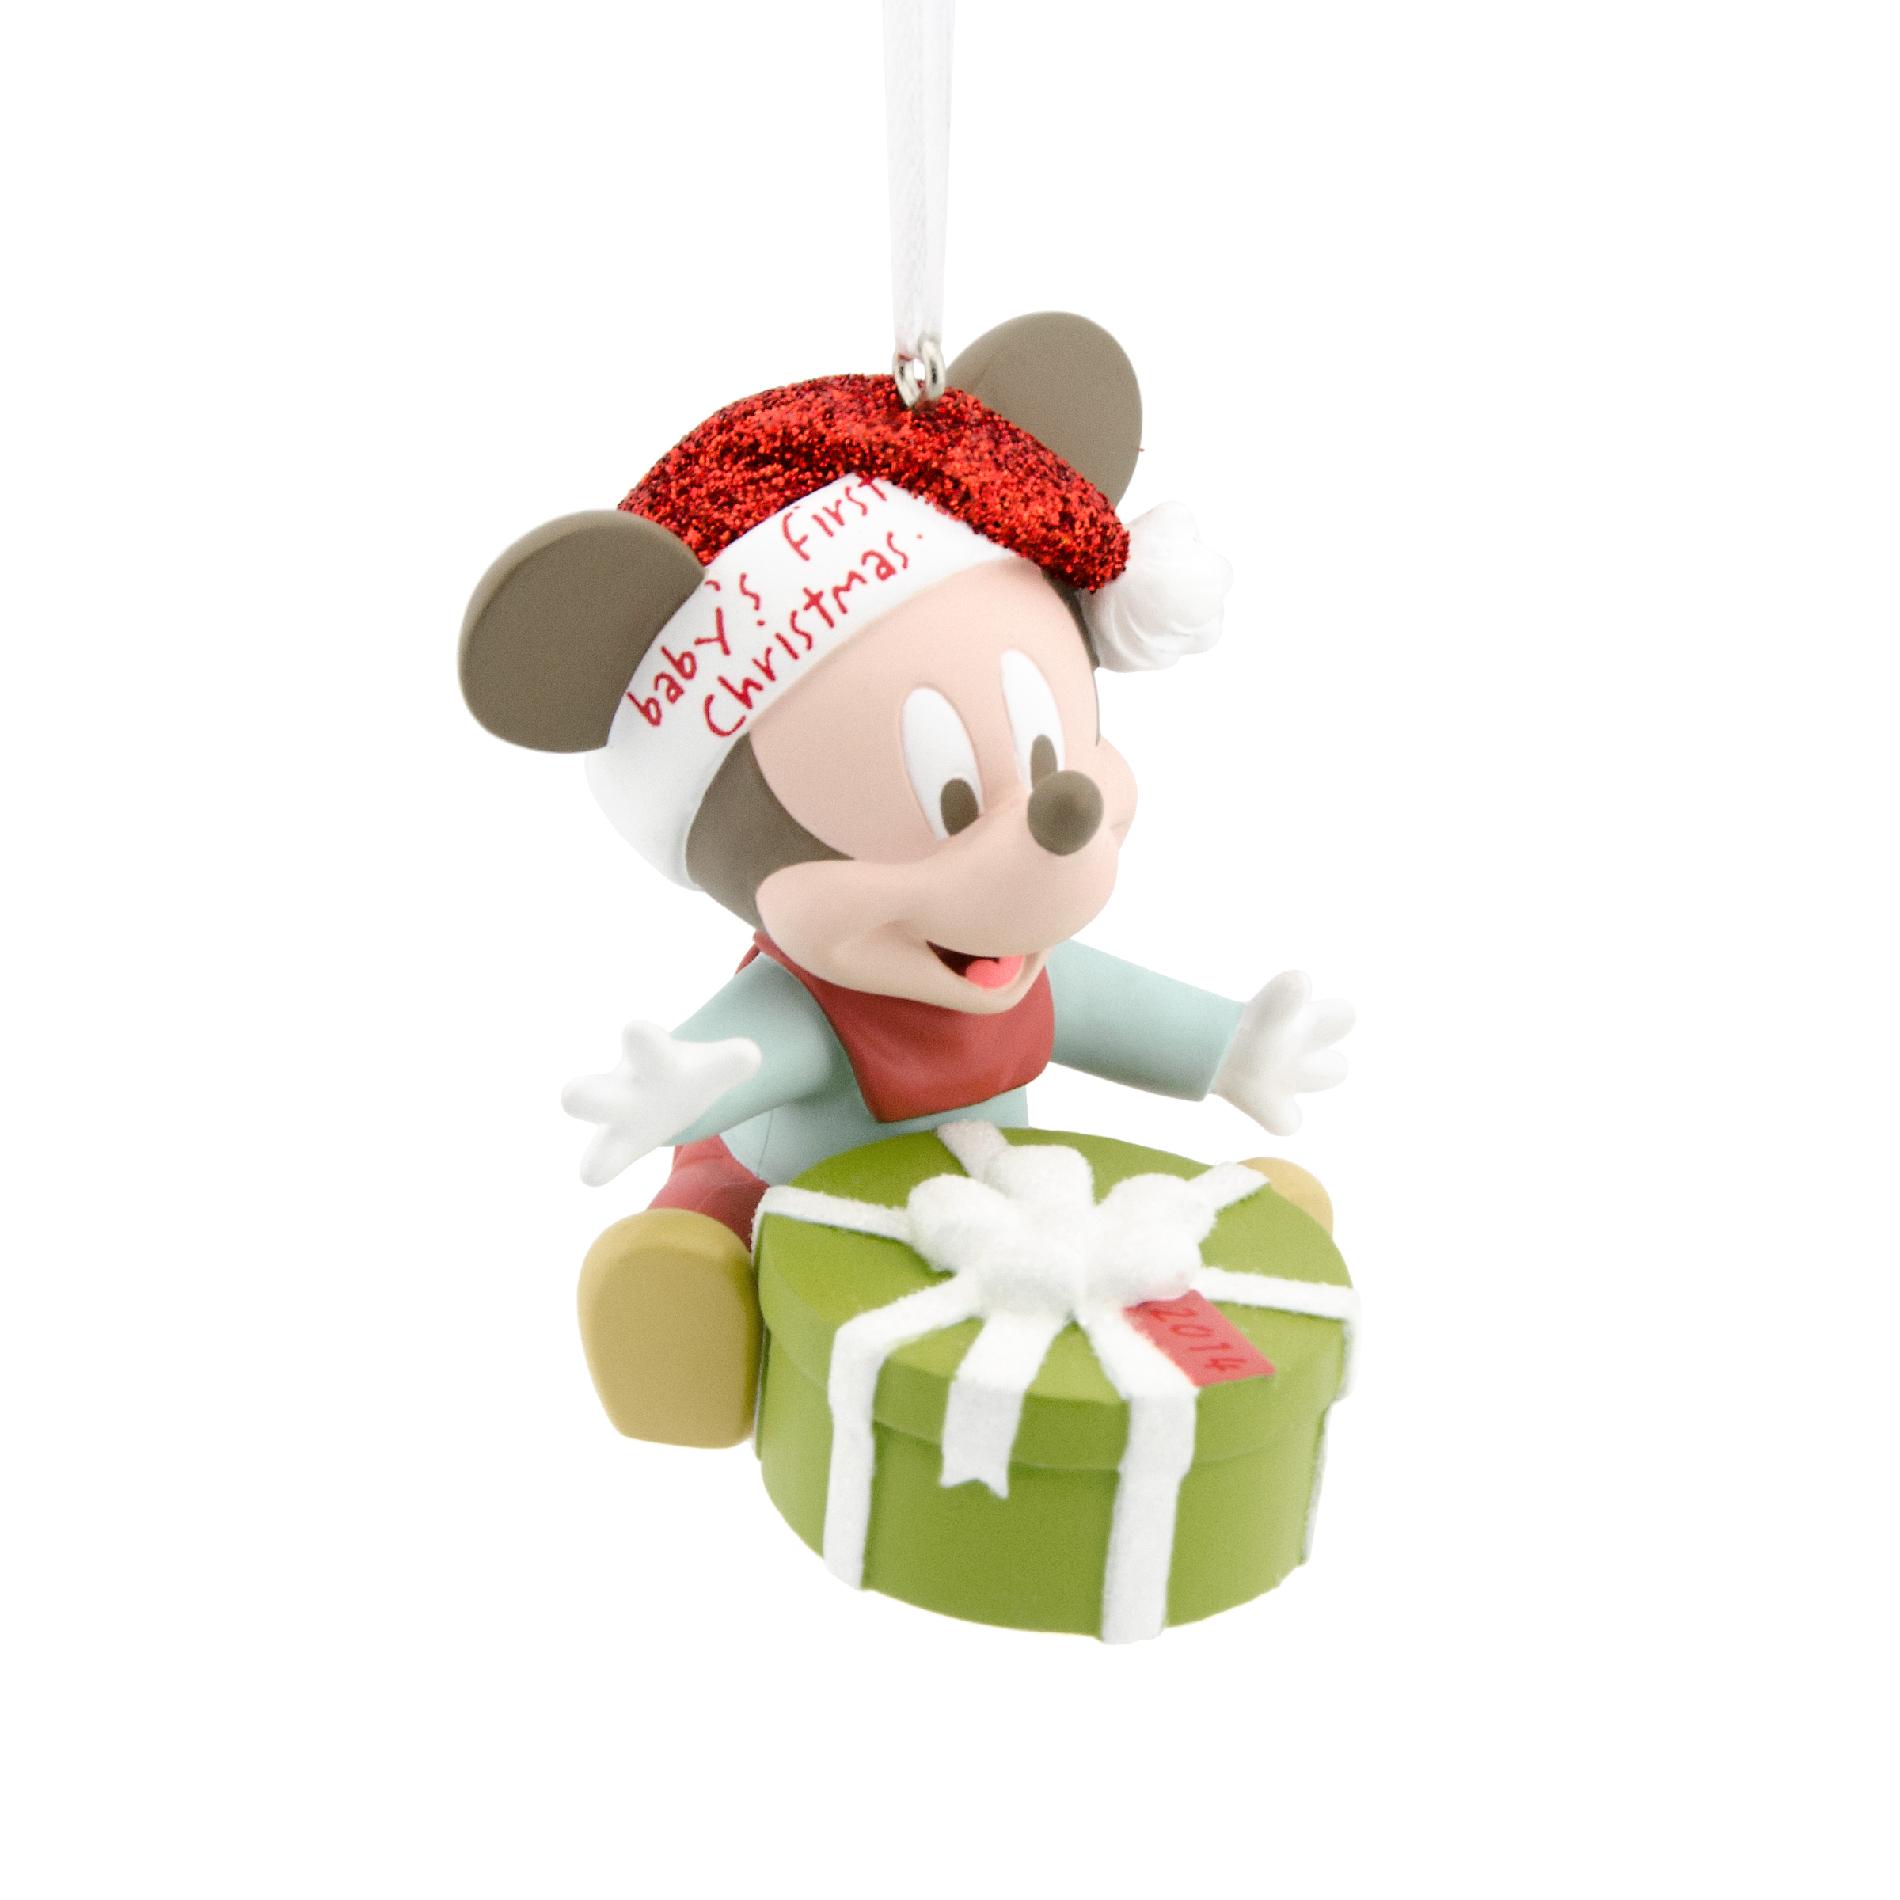 Disney Hallmark Mickey Mouse Baby's First Christmas 2014 Ornament